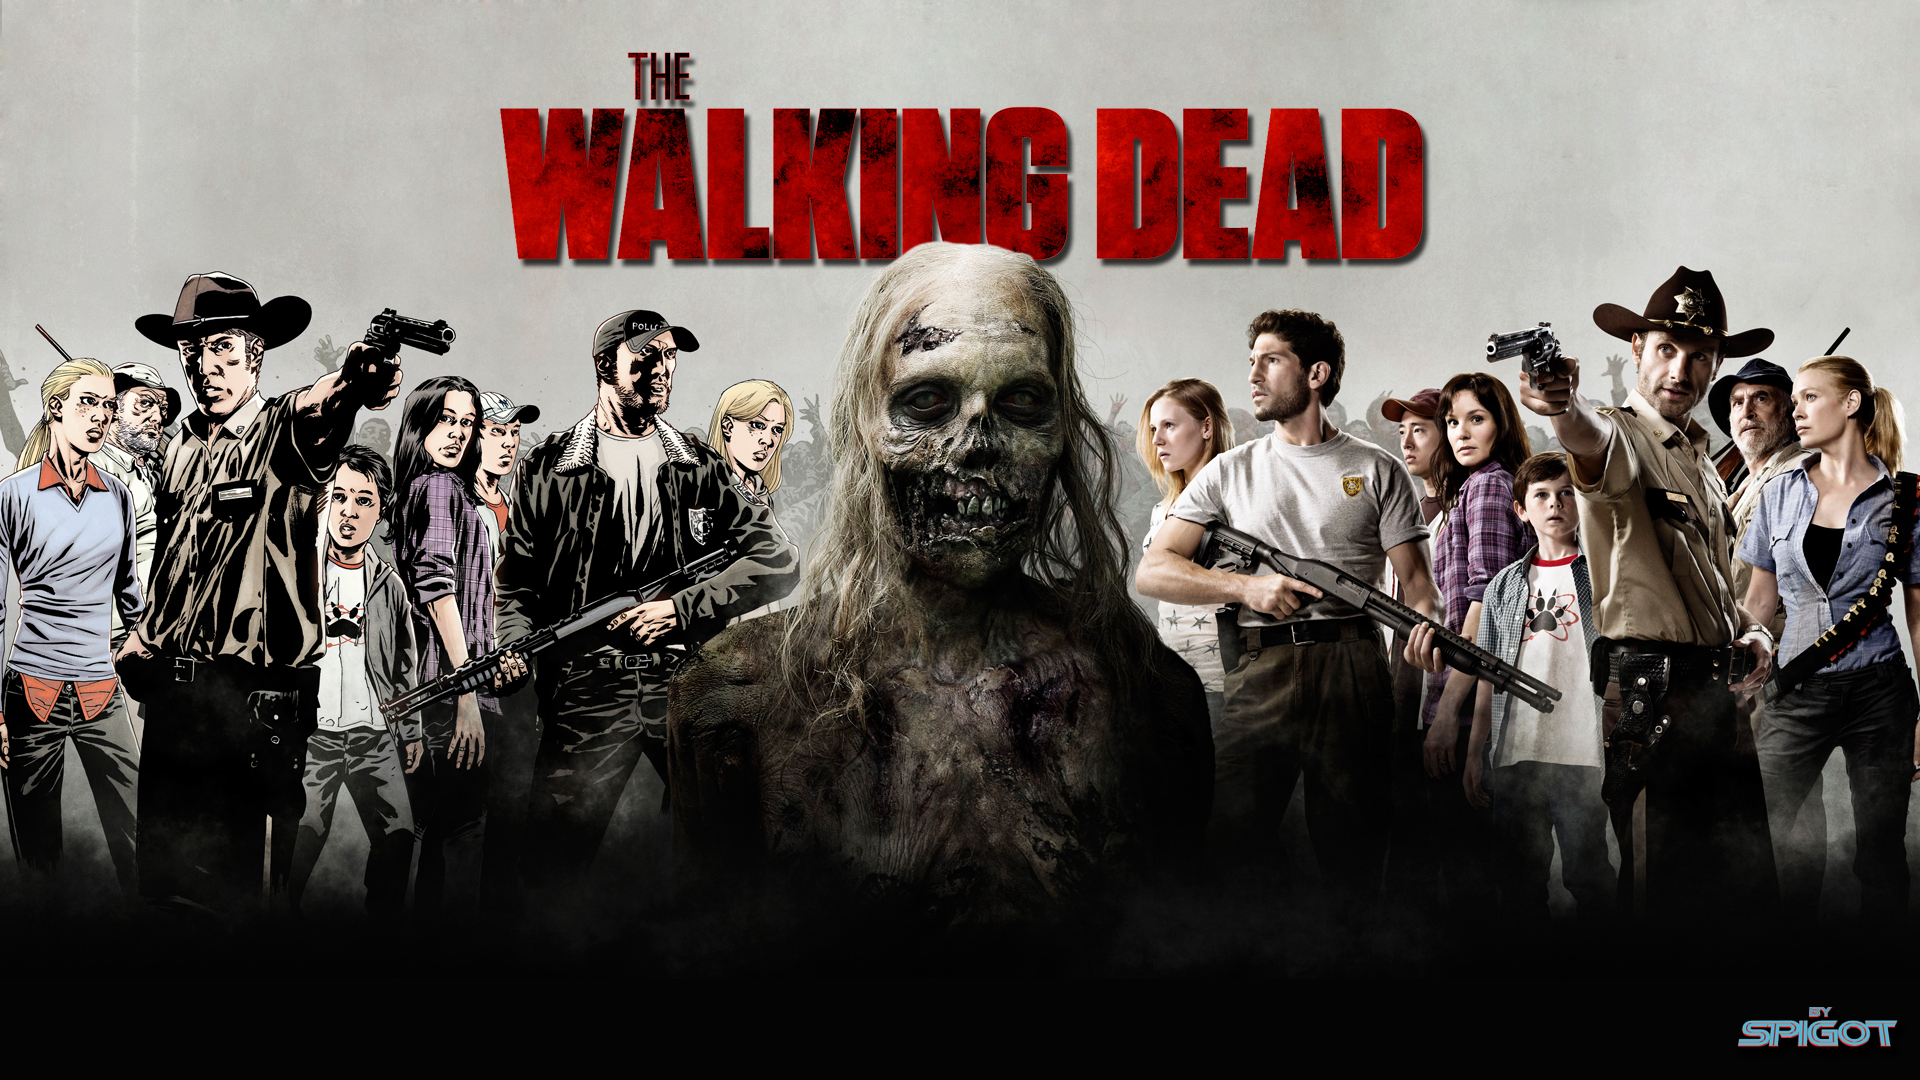 The Walking Dead. George Spigot's Blog